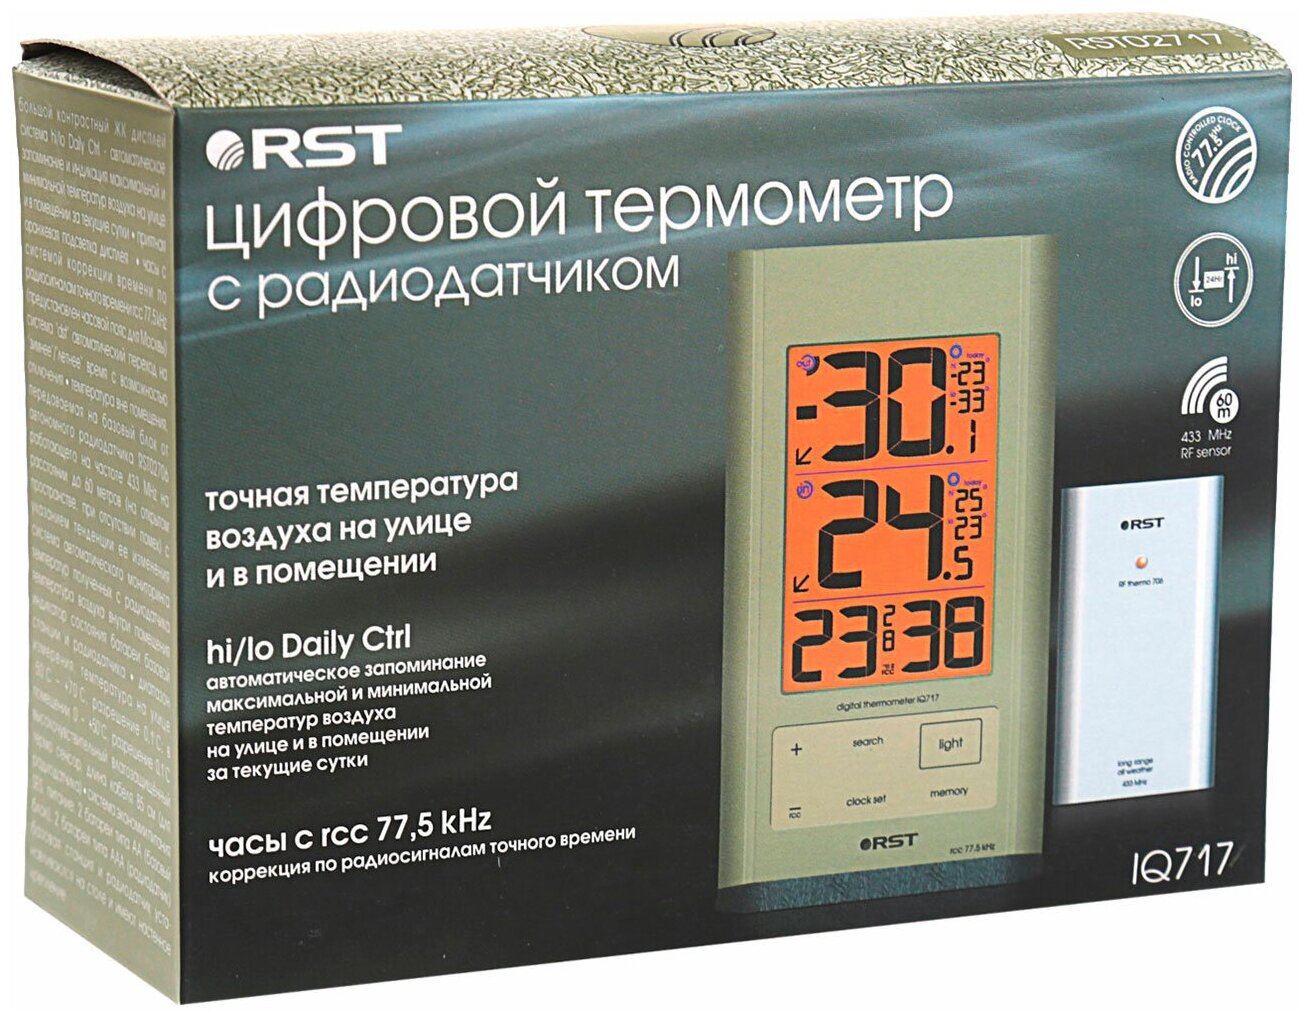 Термометр RST 02717 с радиодатчиком серии 0271Х - фотография № 3